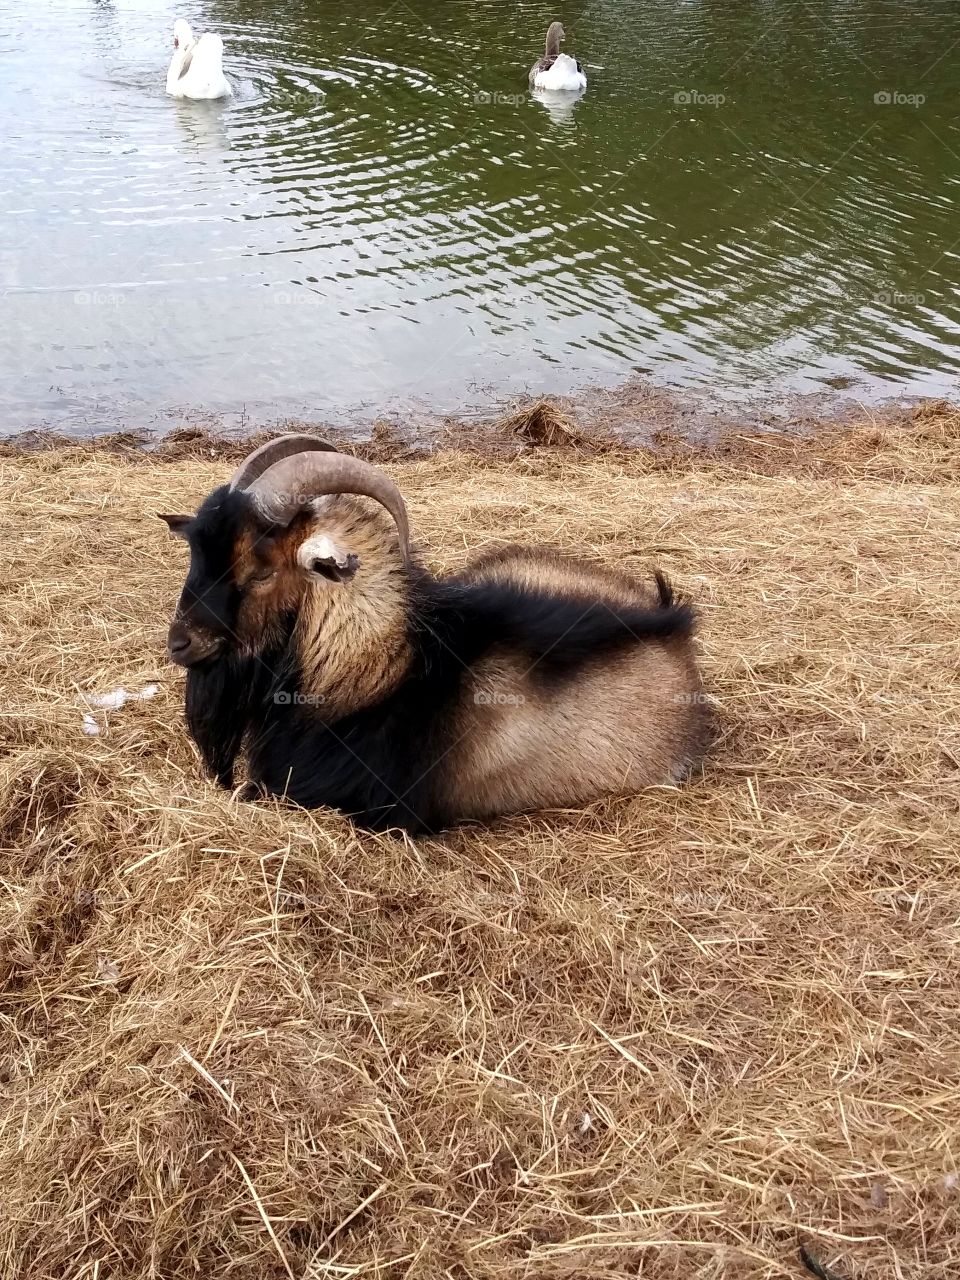 billy goat